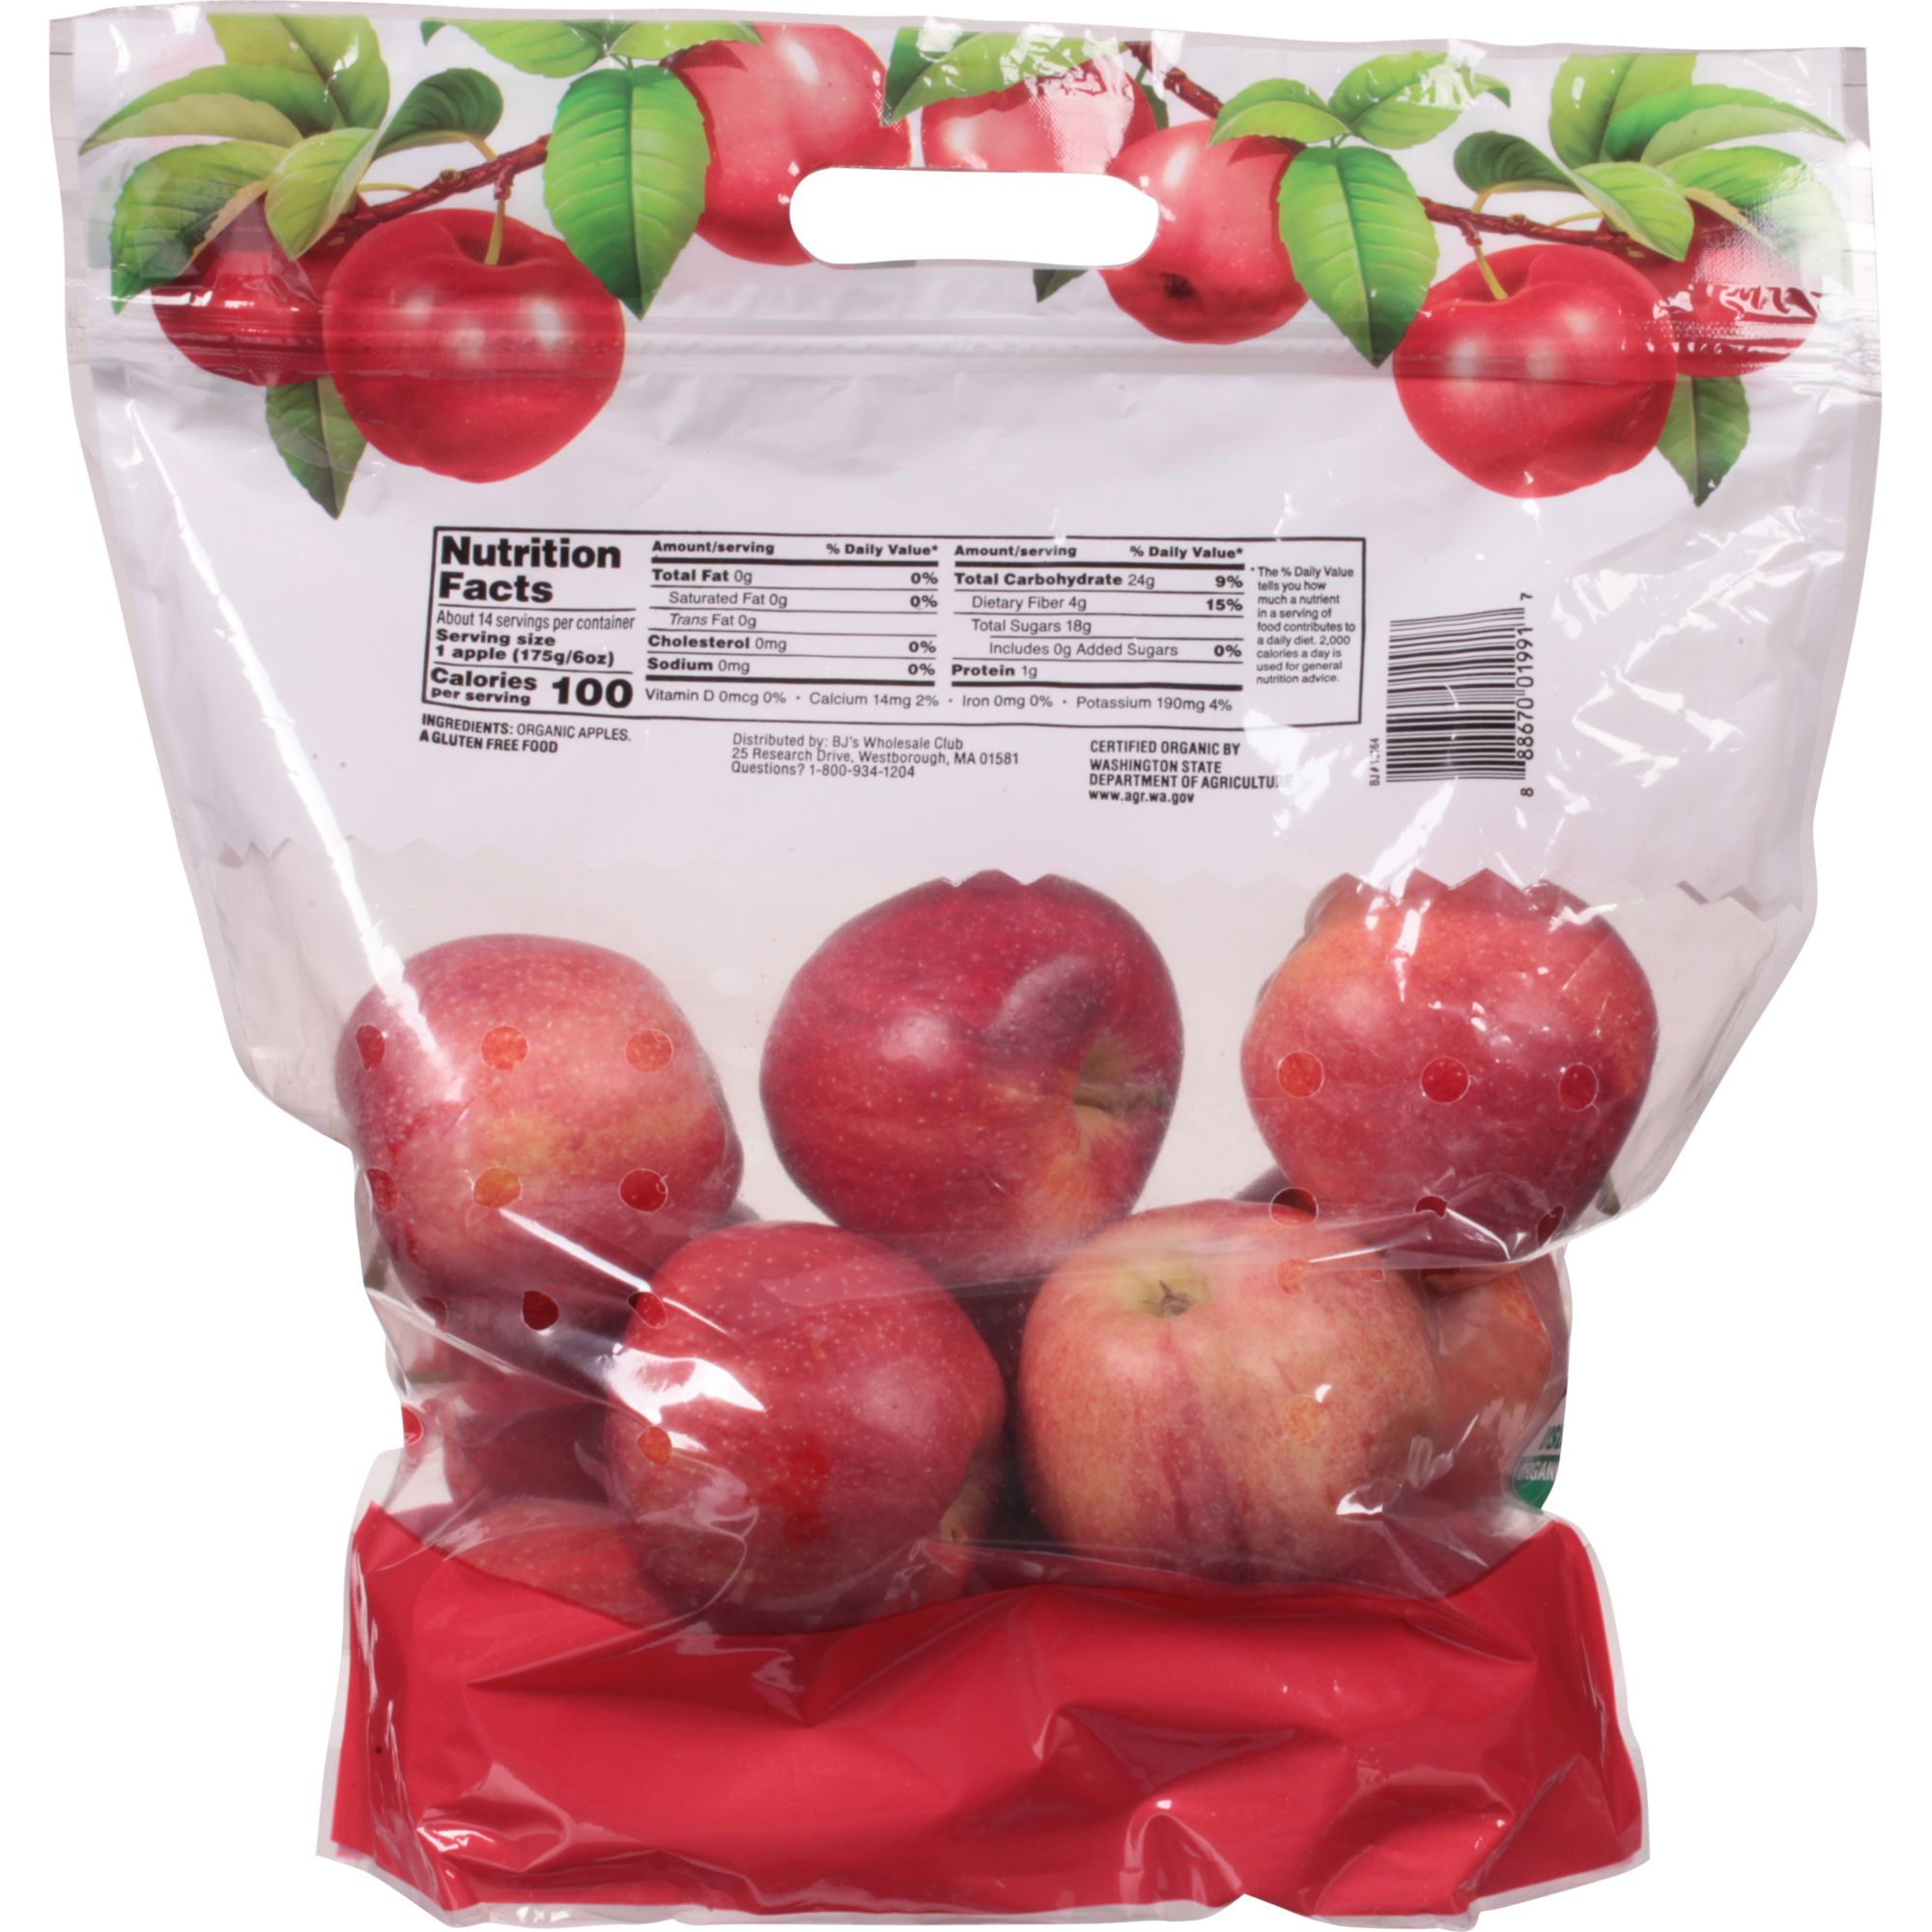 WHOLE FOODS MARKET Organic Gala Apple $1.99/lb